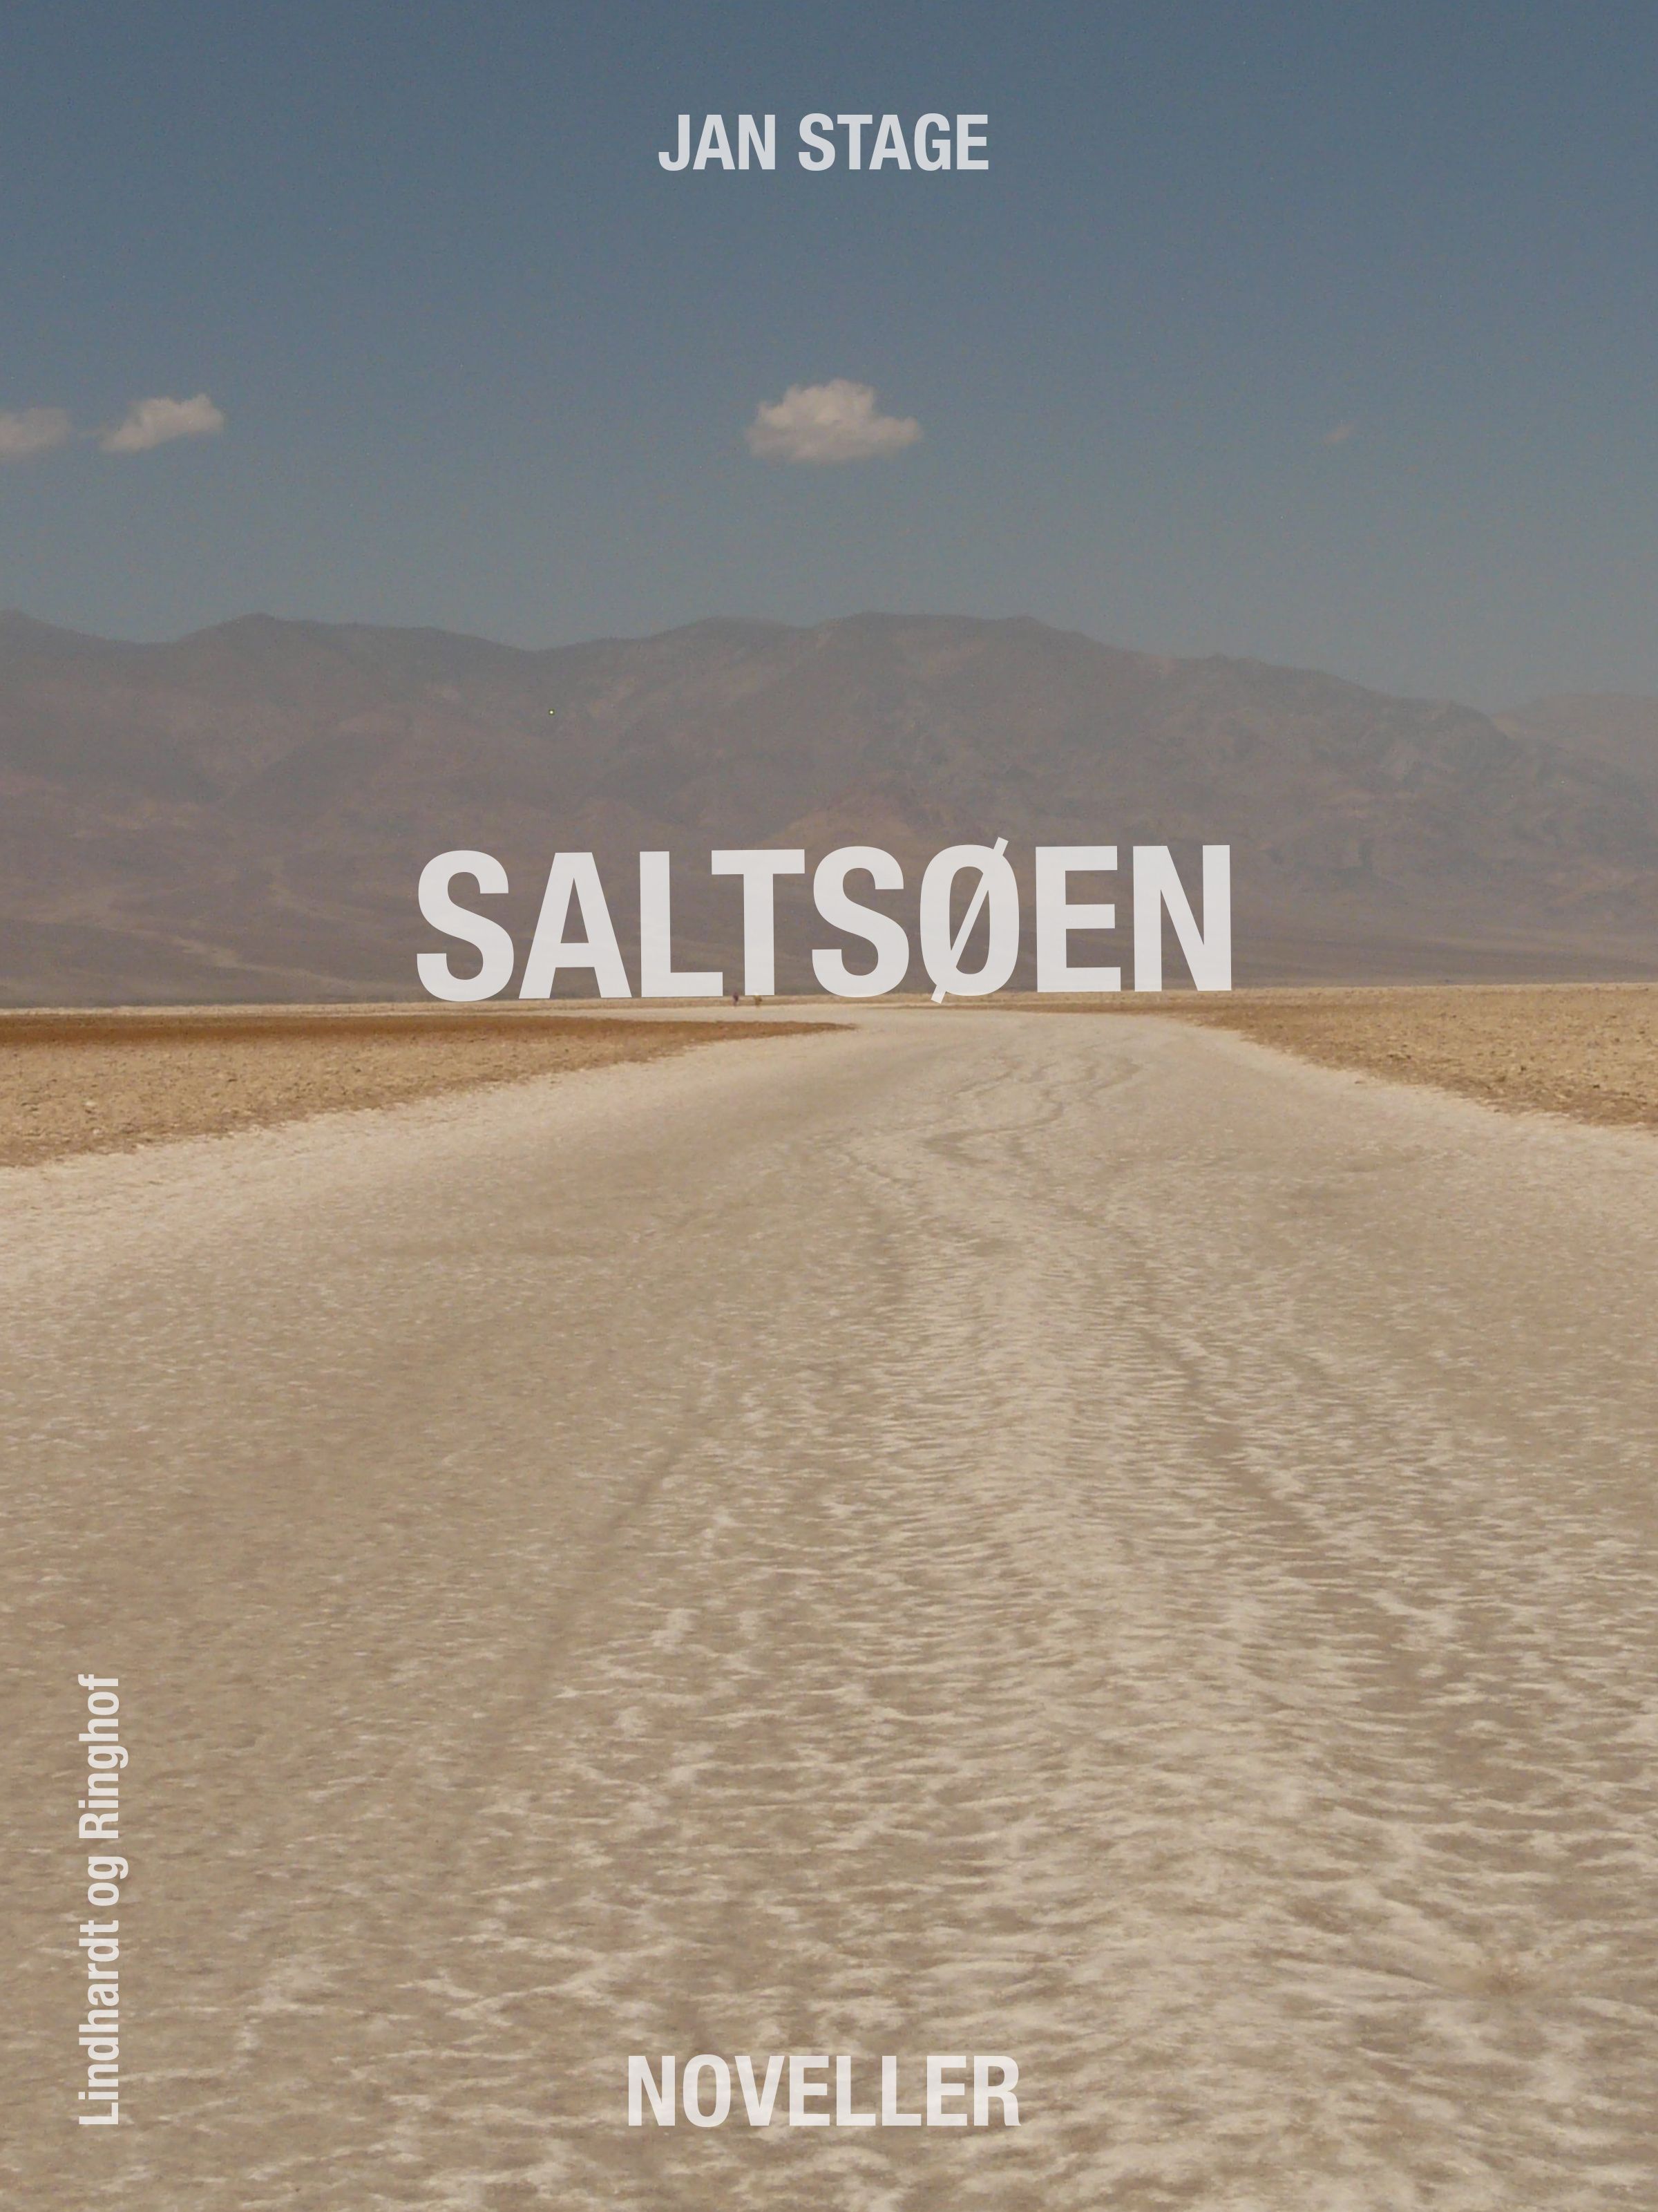 Saltsøen, ljudbok av Jan Stage